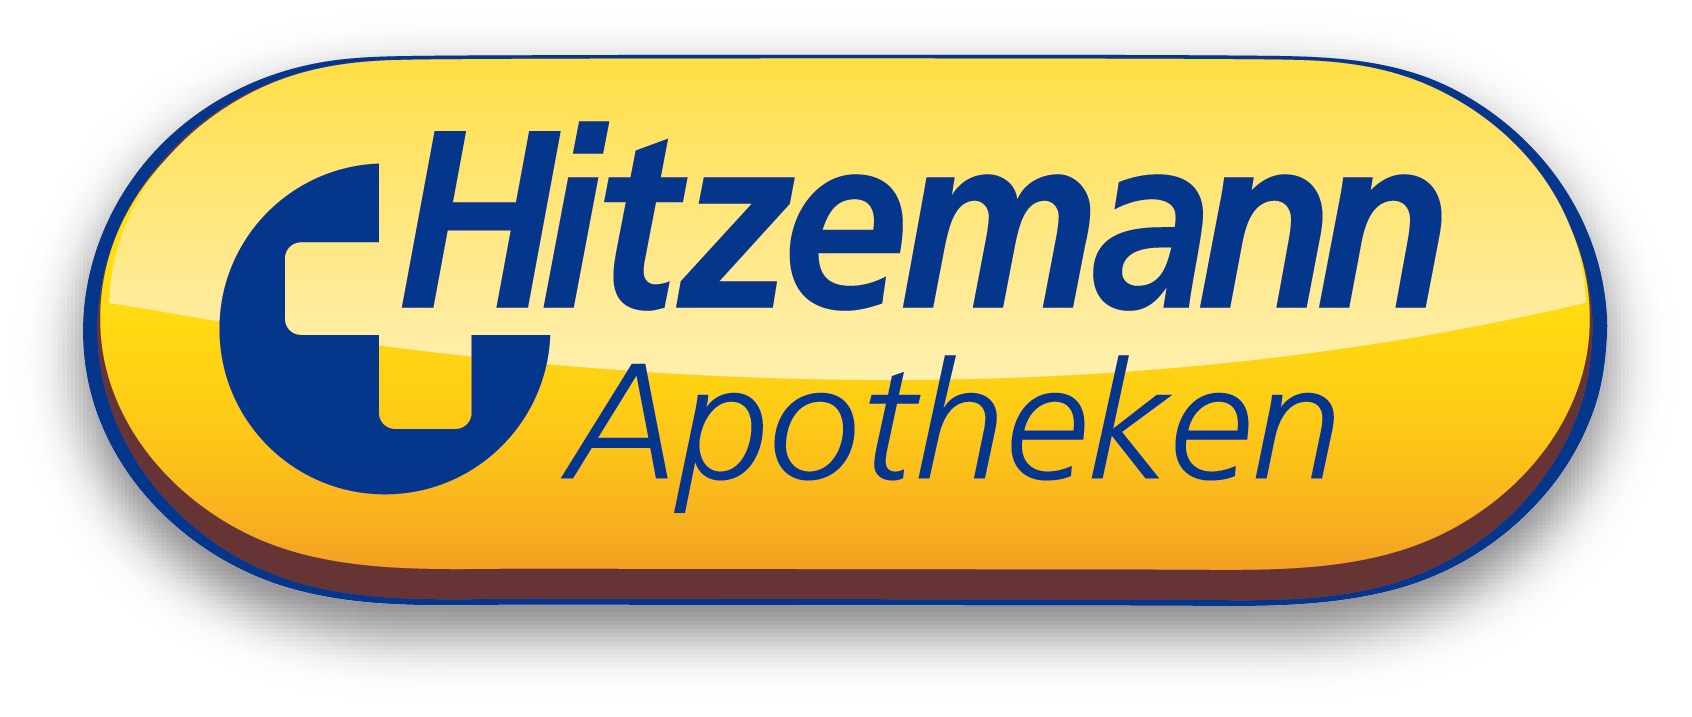 Hitzemann Apotheken – Logo